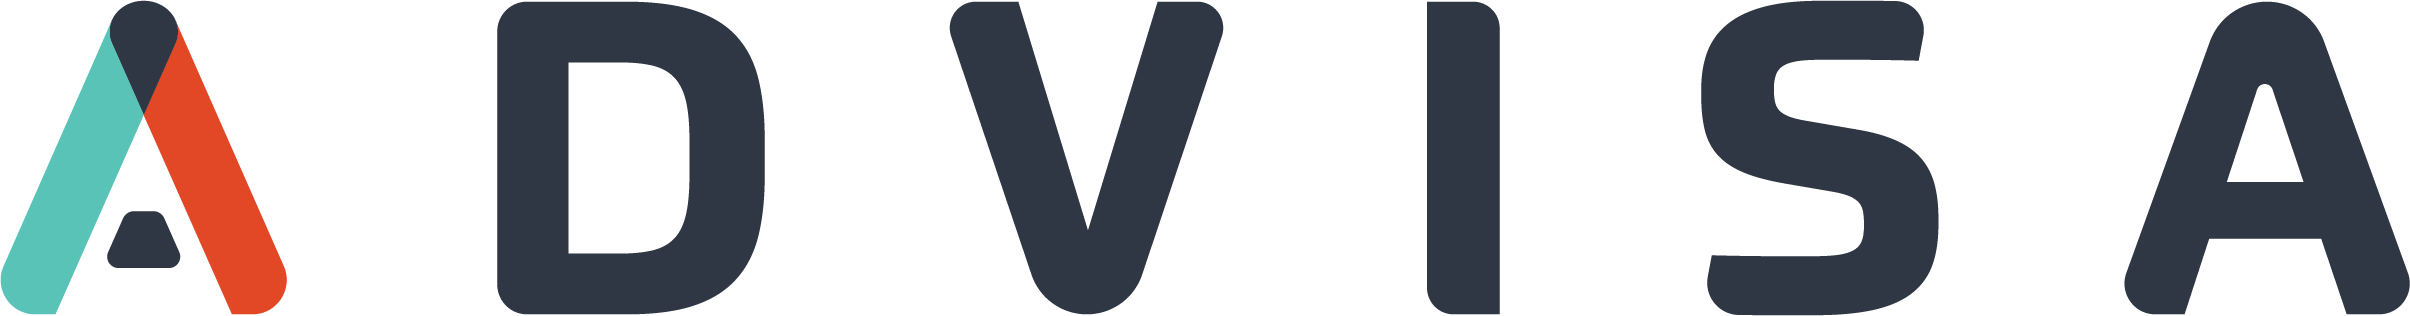 ADVISA logo (1)